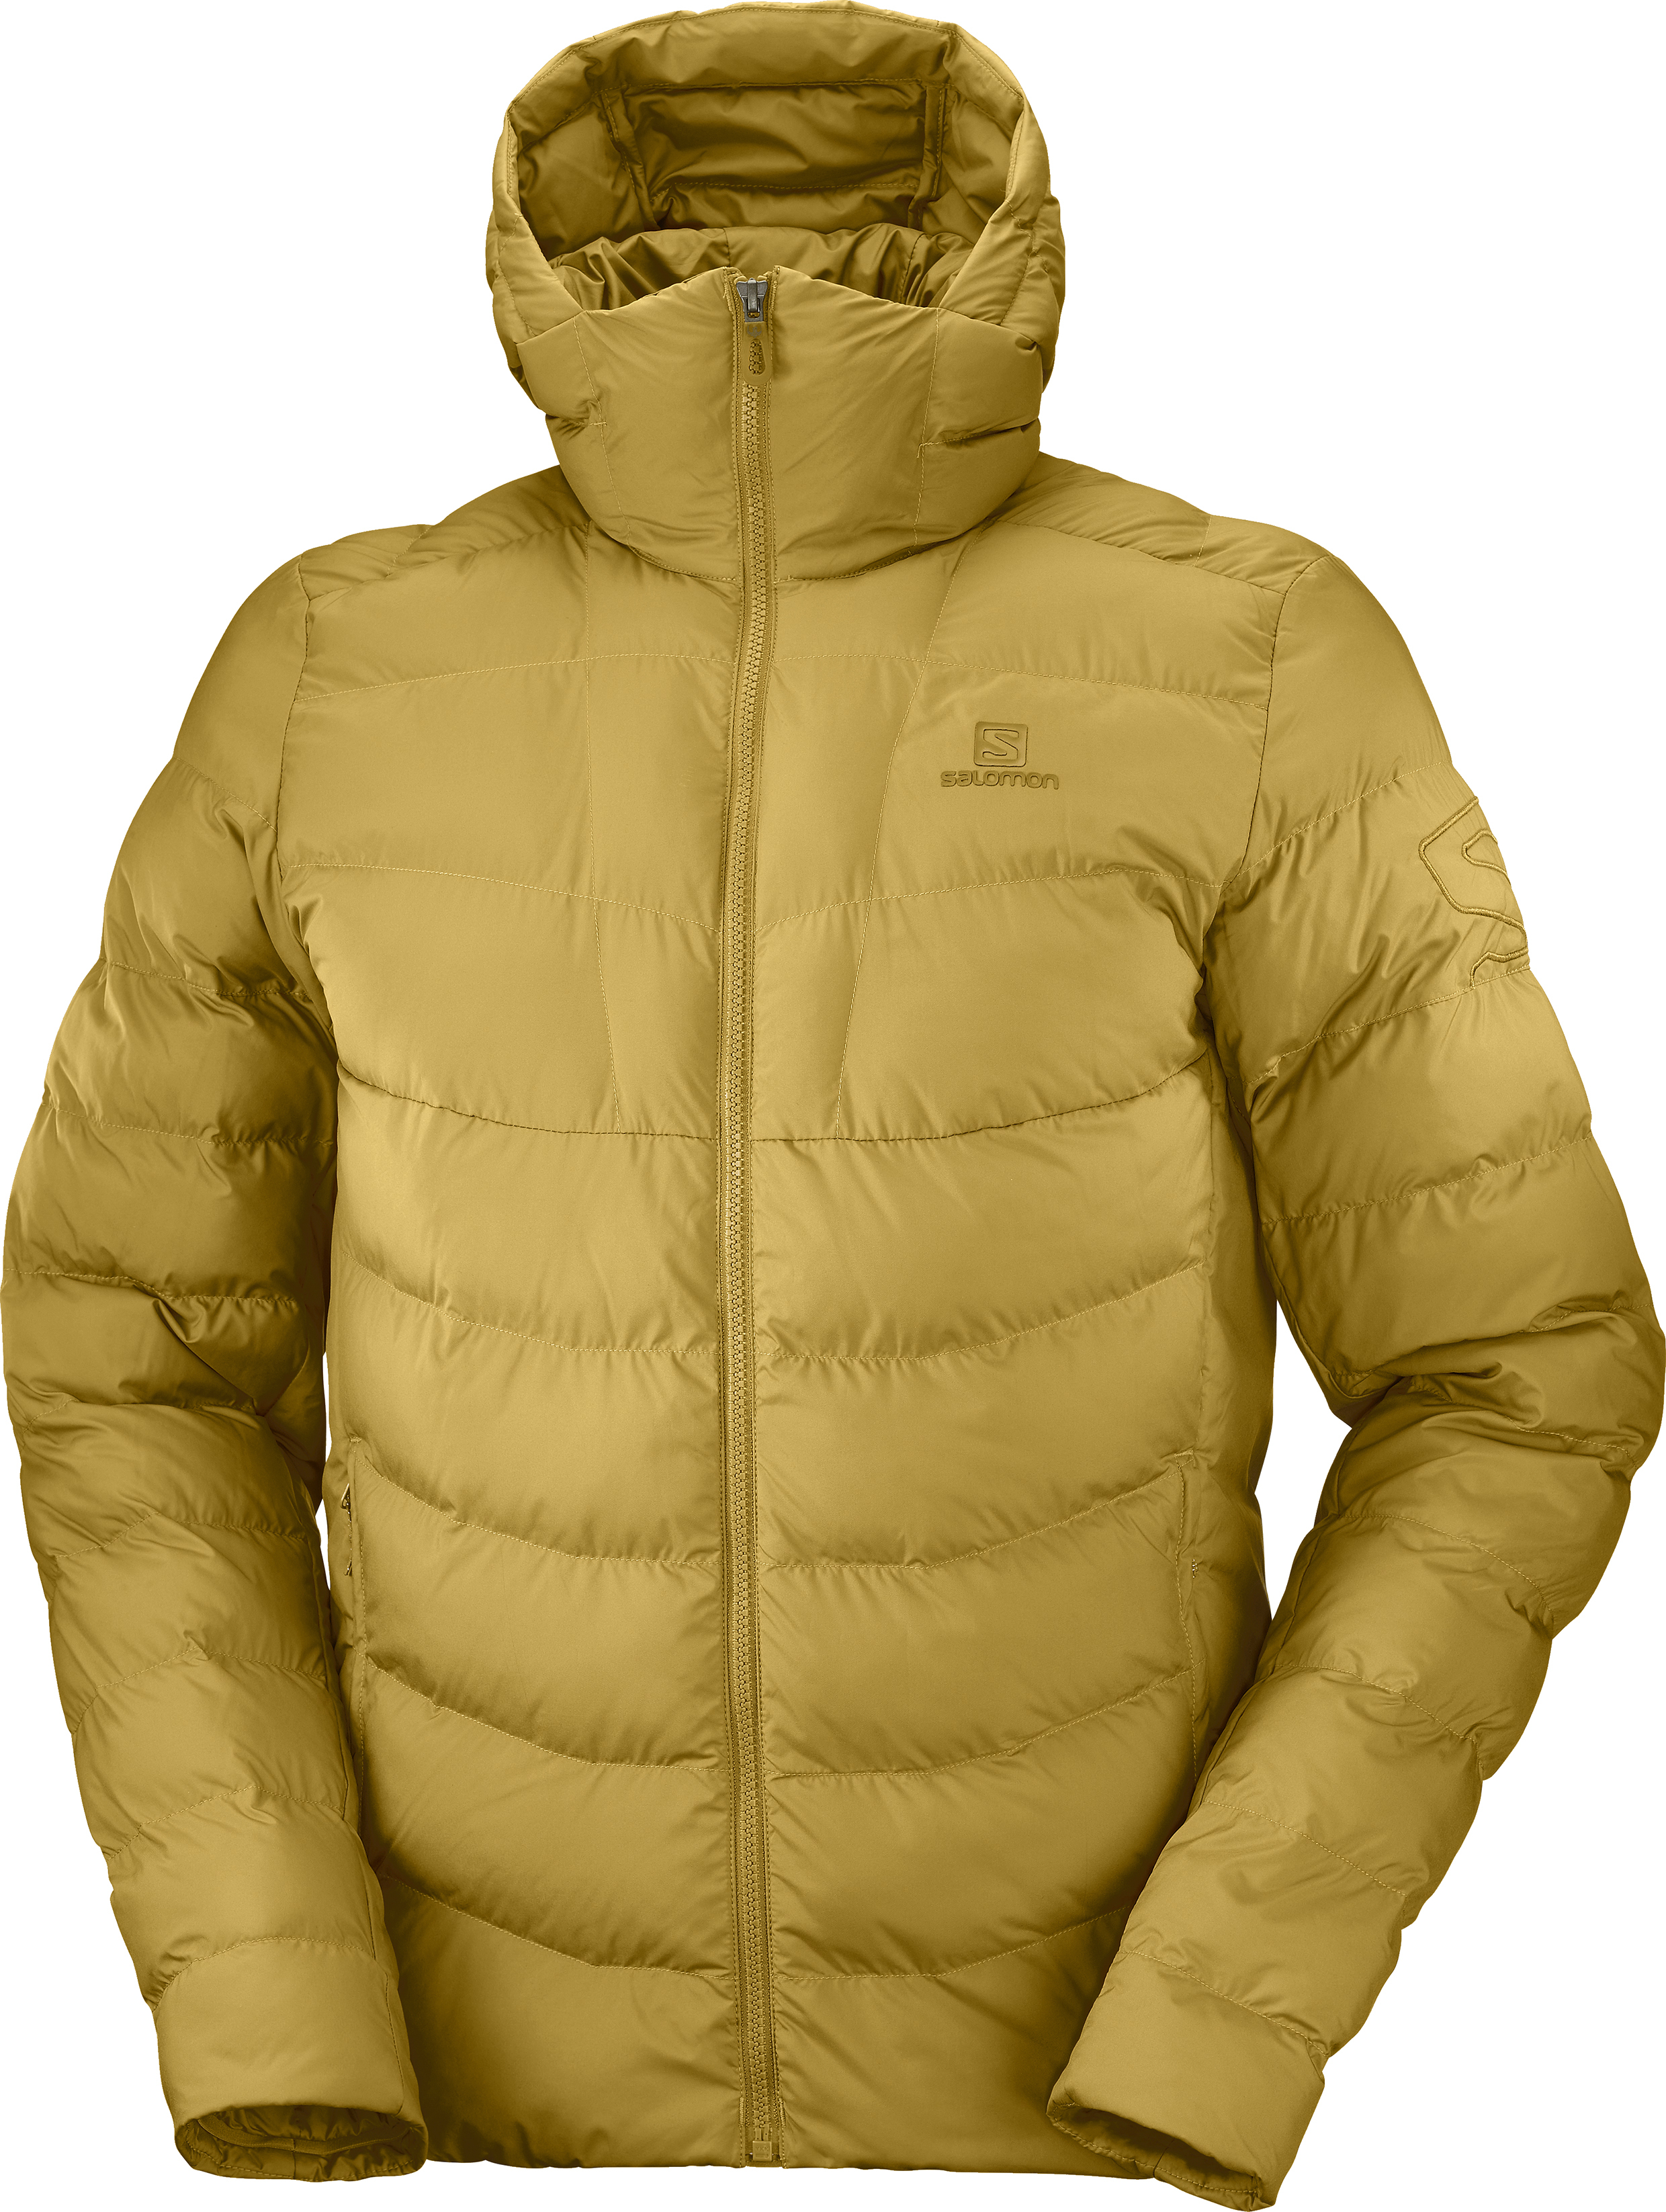 Куртка мужская Salomon Lc1578000 зеленая S